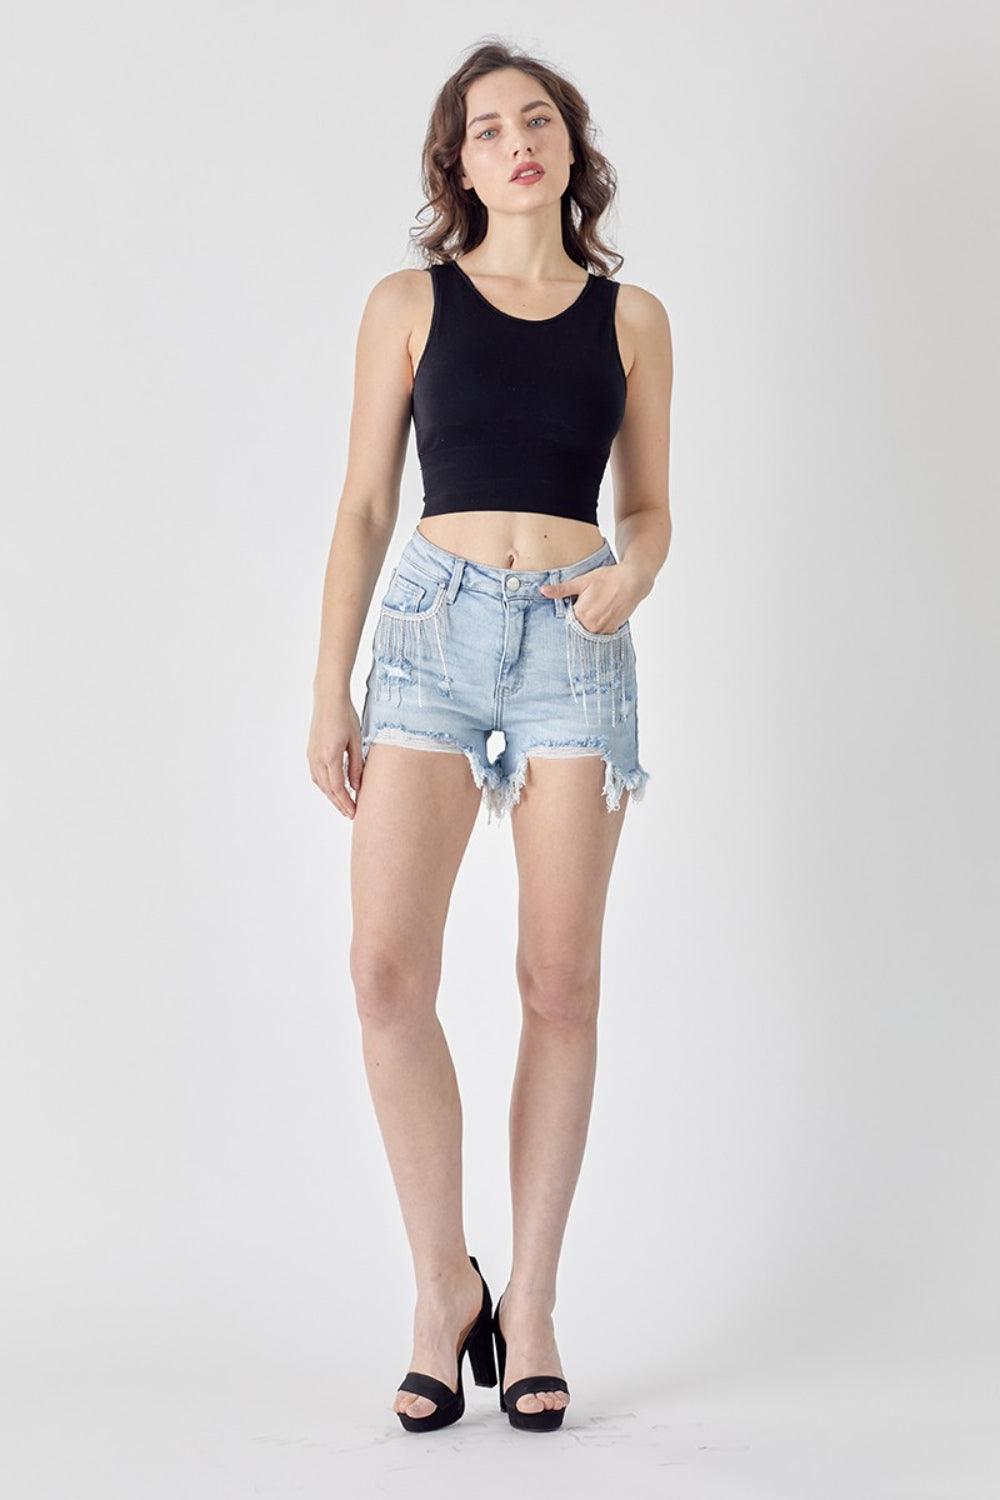 RISEN Frayed Hem Denim Shorts with Fringe Detail Pockets - AMIClubwear